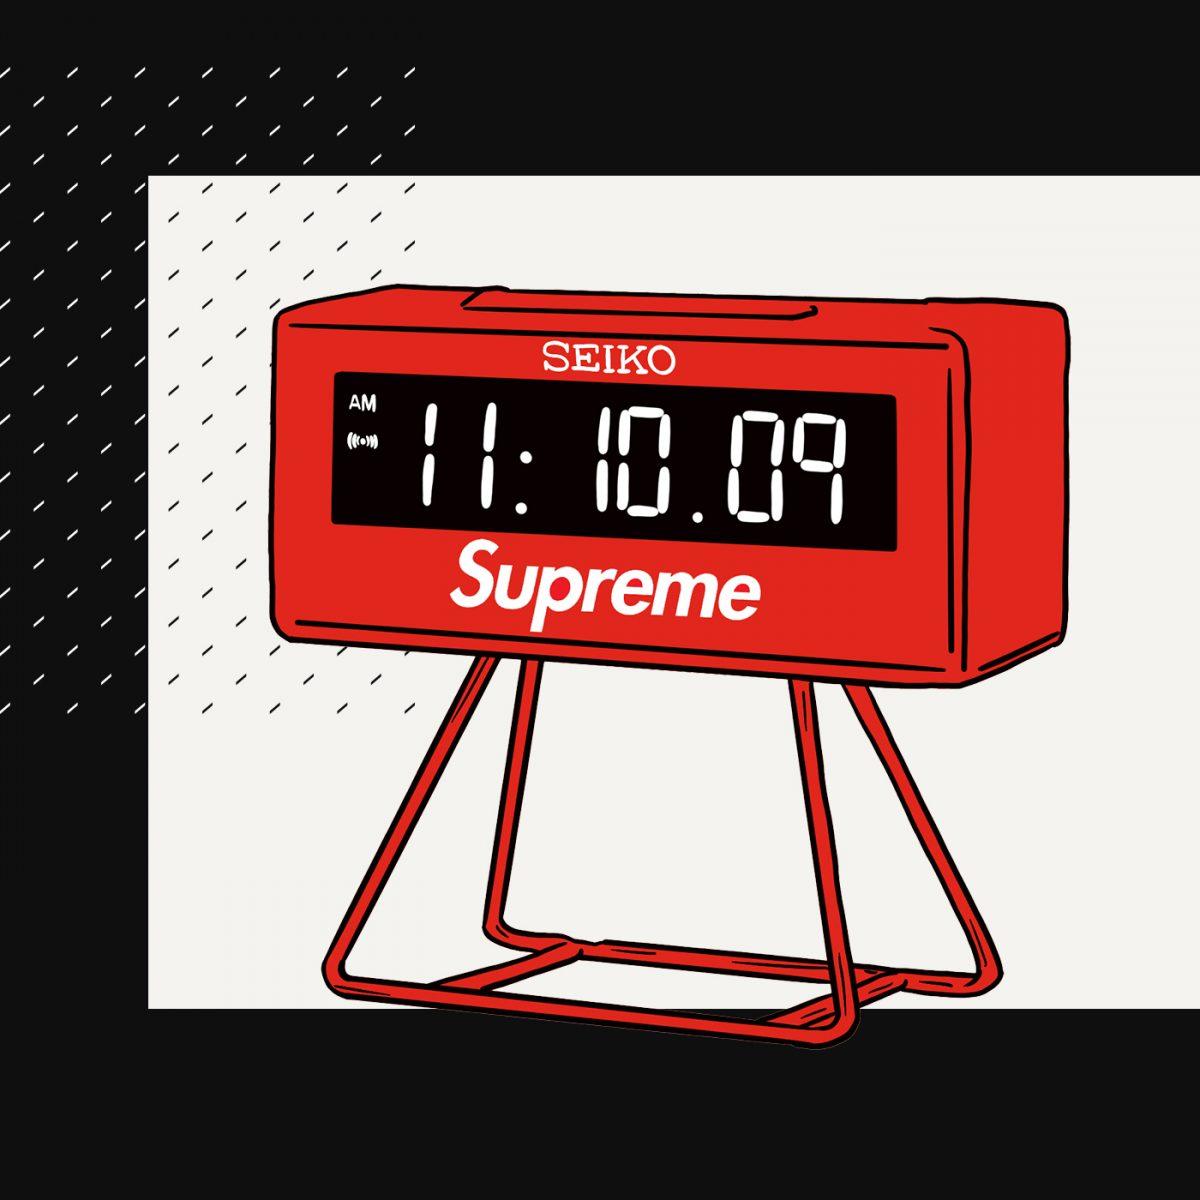 Supreme Seiko Marathon Clock: Supreme Pick of the Week - StockX News